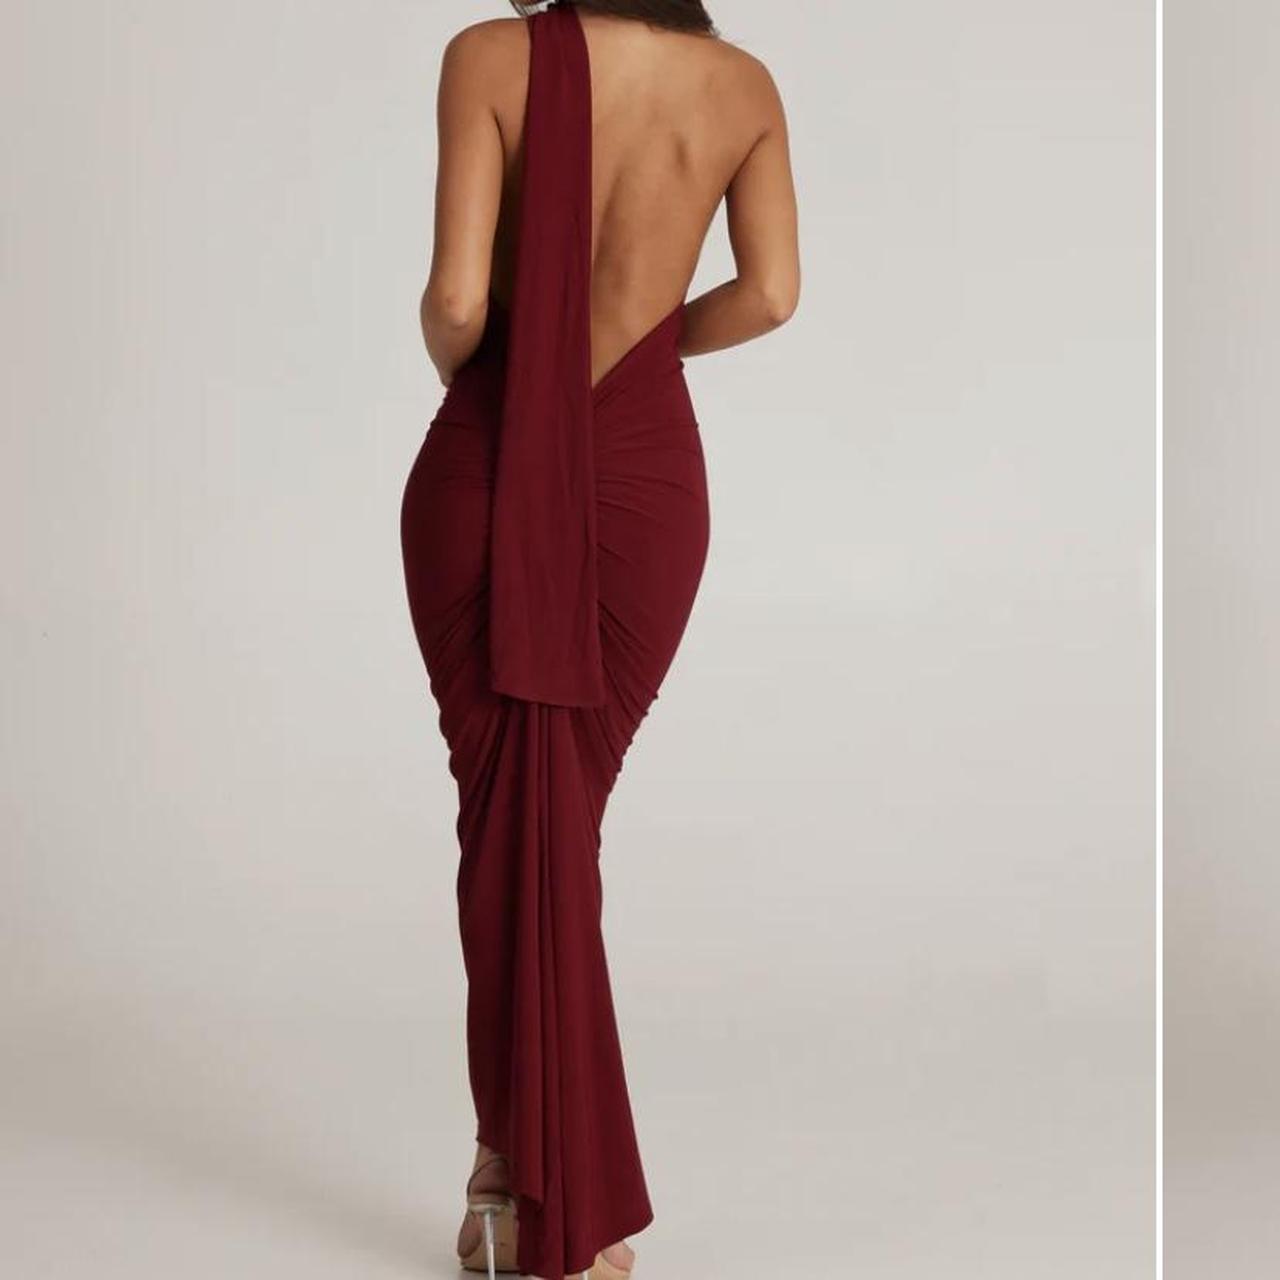 Melani the label leoni dress Size XS (6-8) Wine red... - Depop